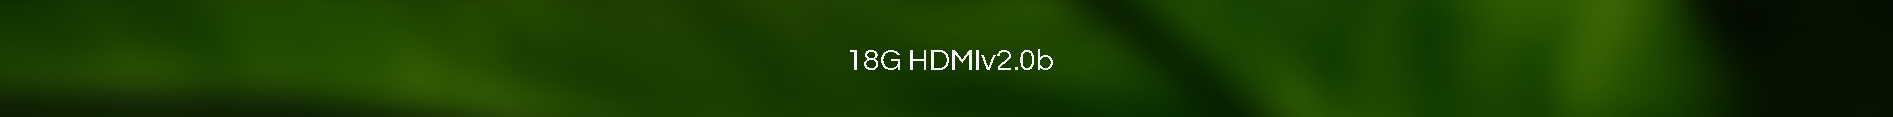 18G_HDMI20